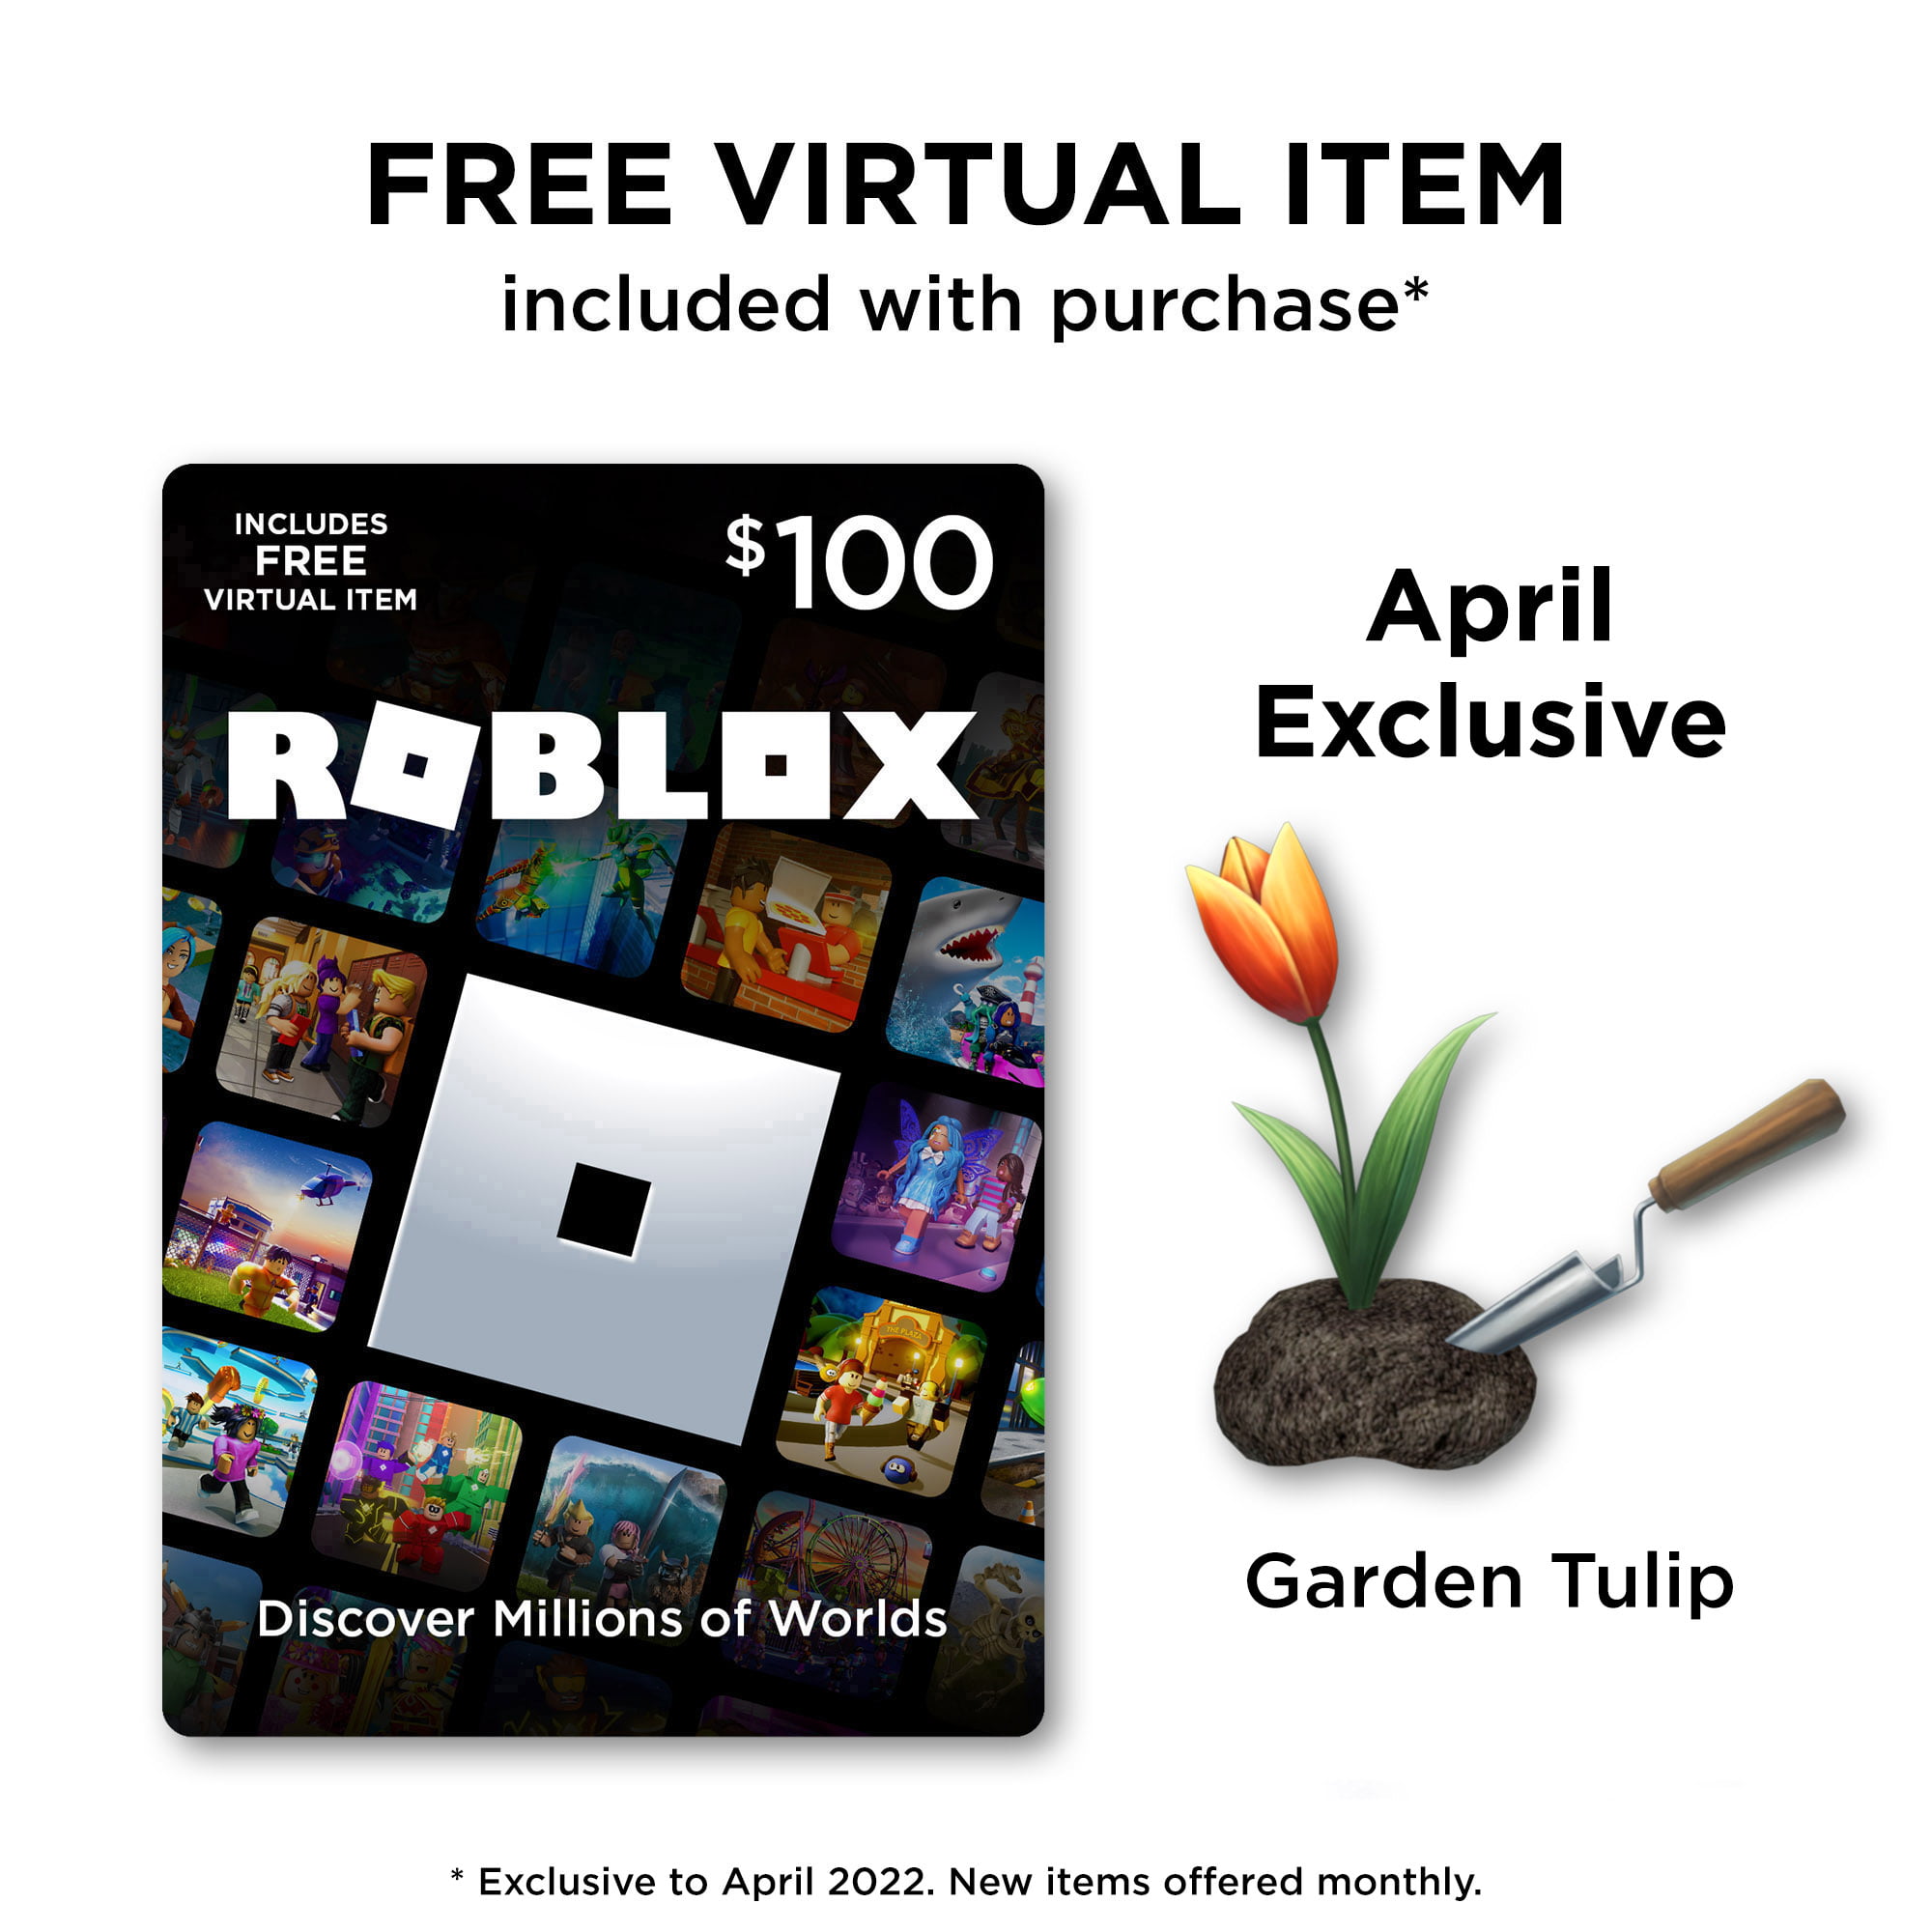 Free item roblox